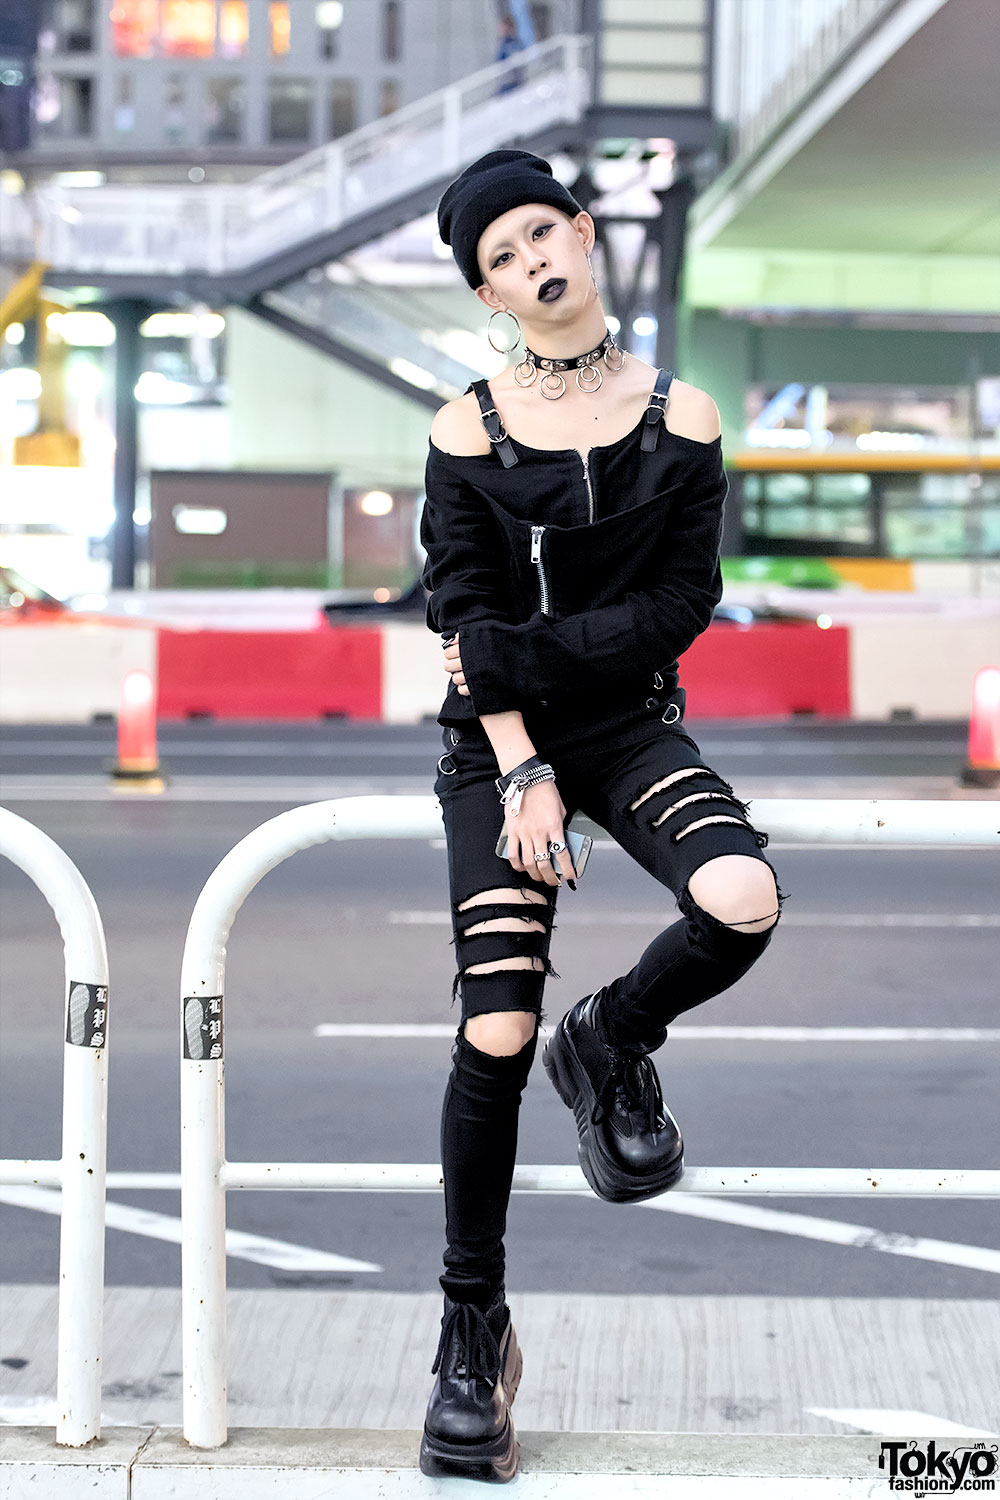 Dark Tokyo Street Style w/ Black Lipstick, Fetis & Demonia Boots